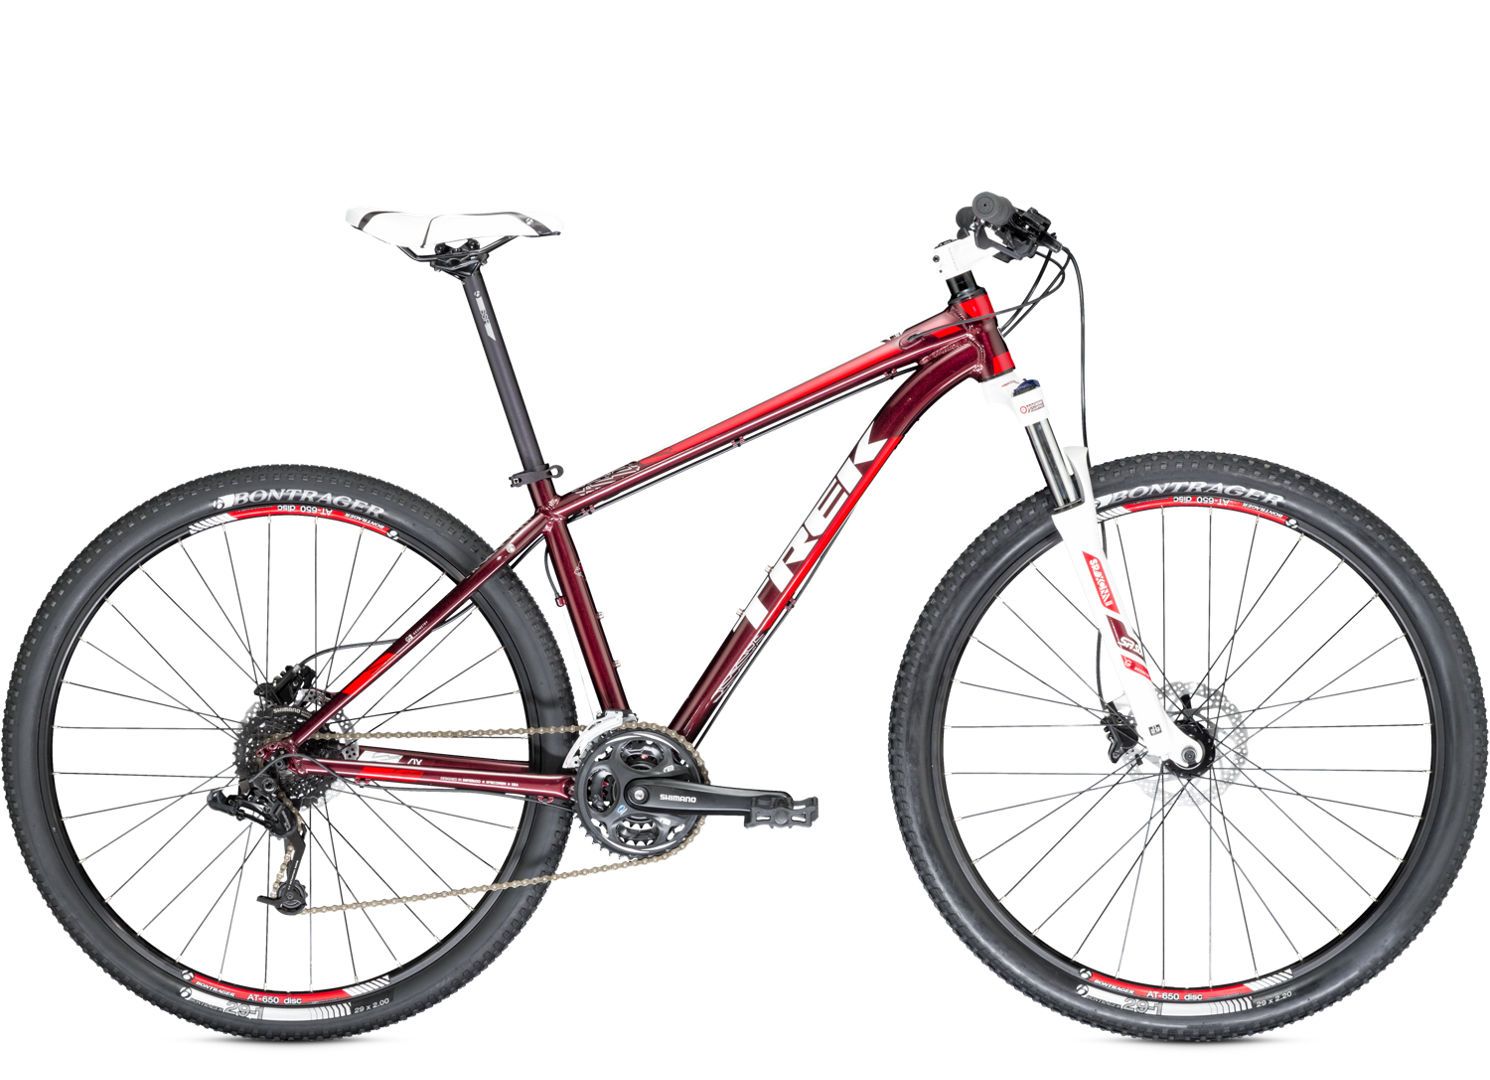  Велосипед Trek X-Caliber 6 2014